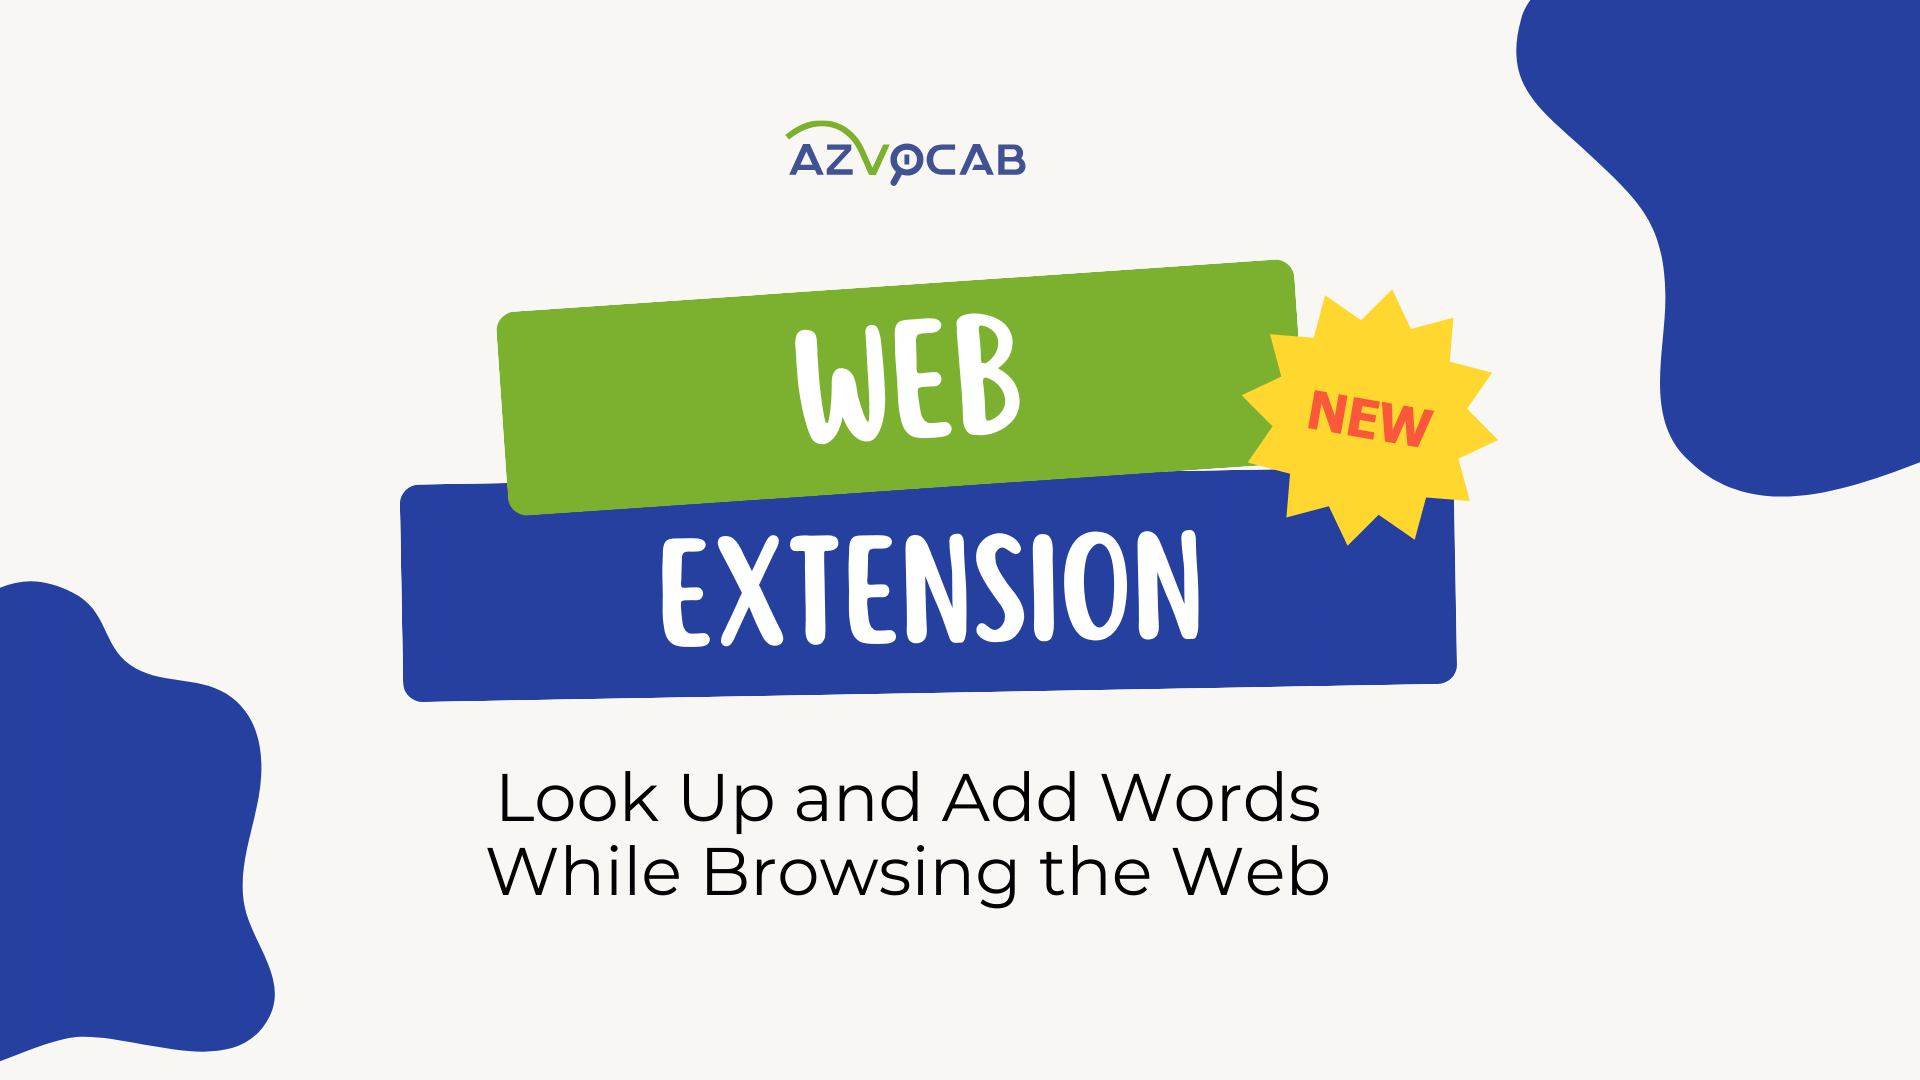 Web extension azVocab Dictionary